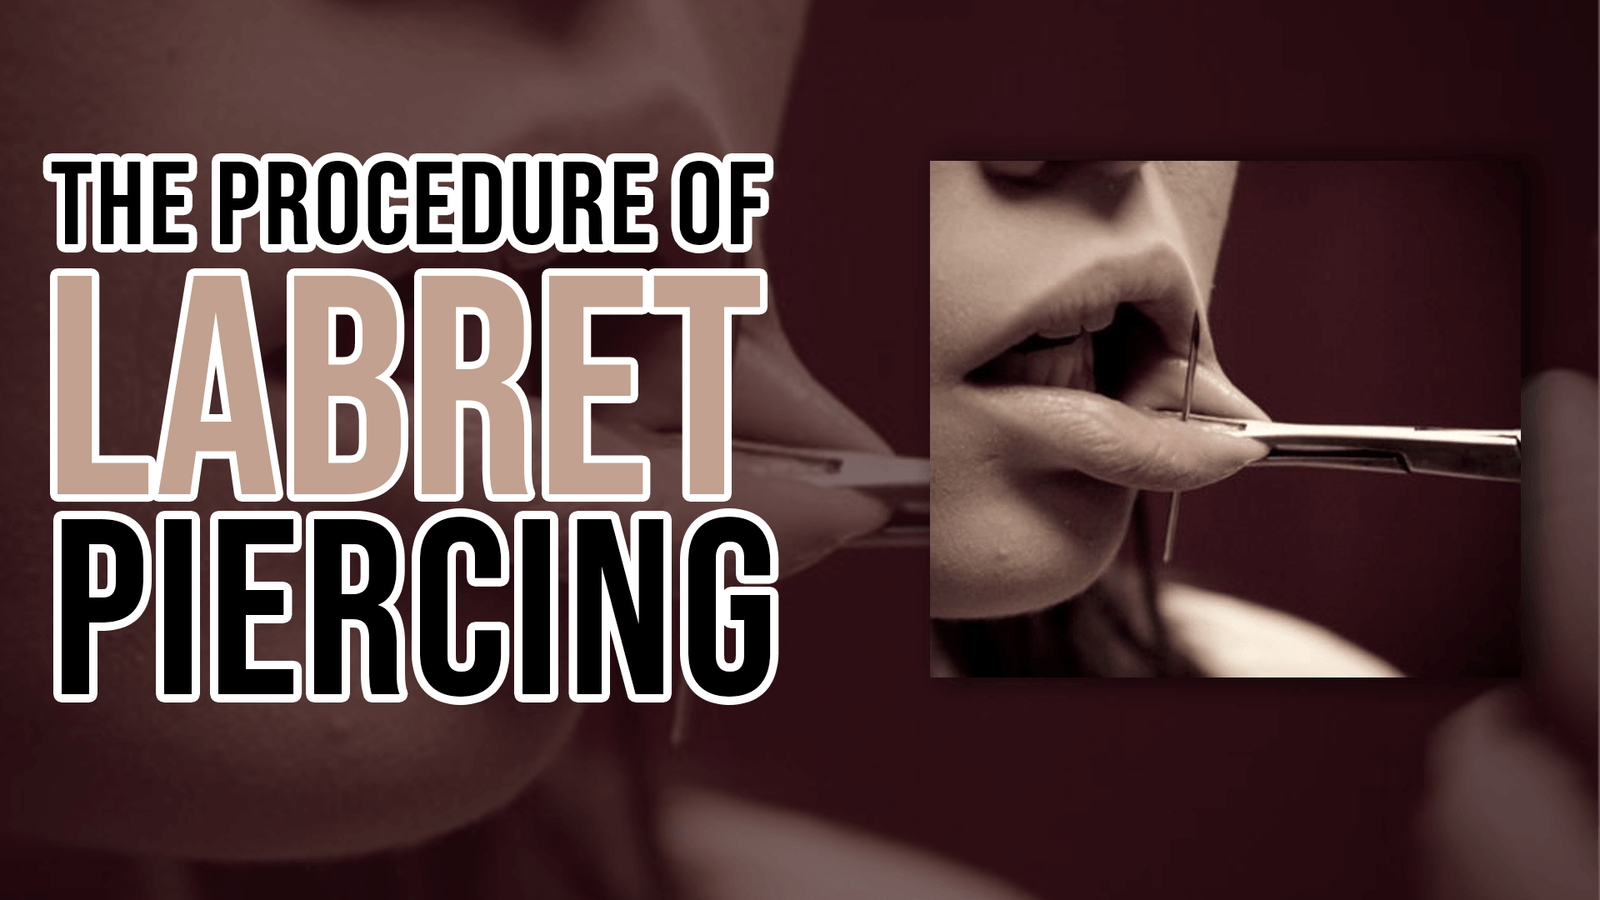 The Procedure of Labret Piercing